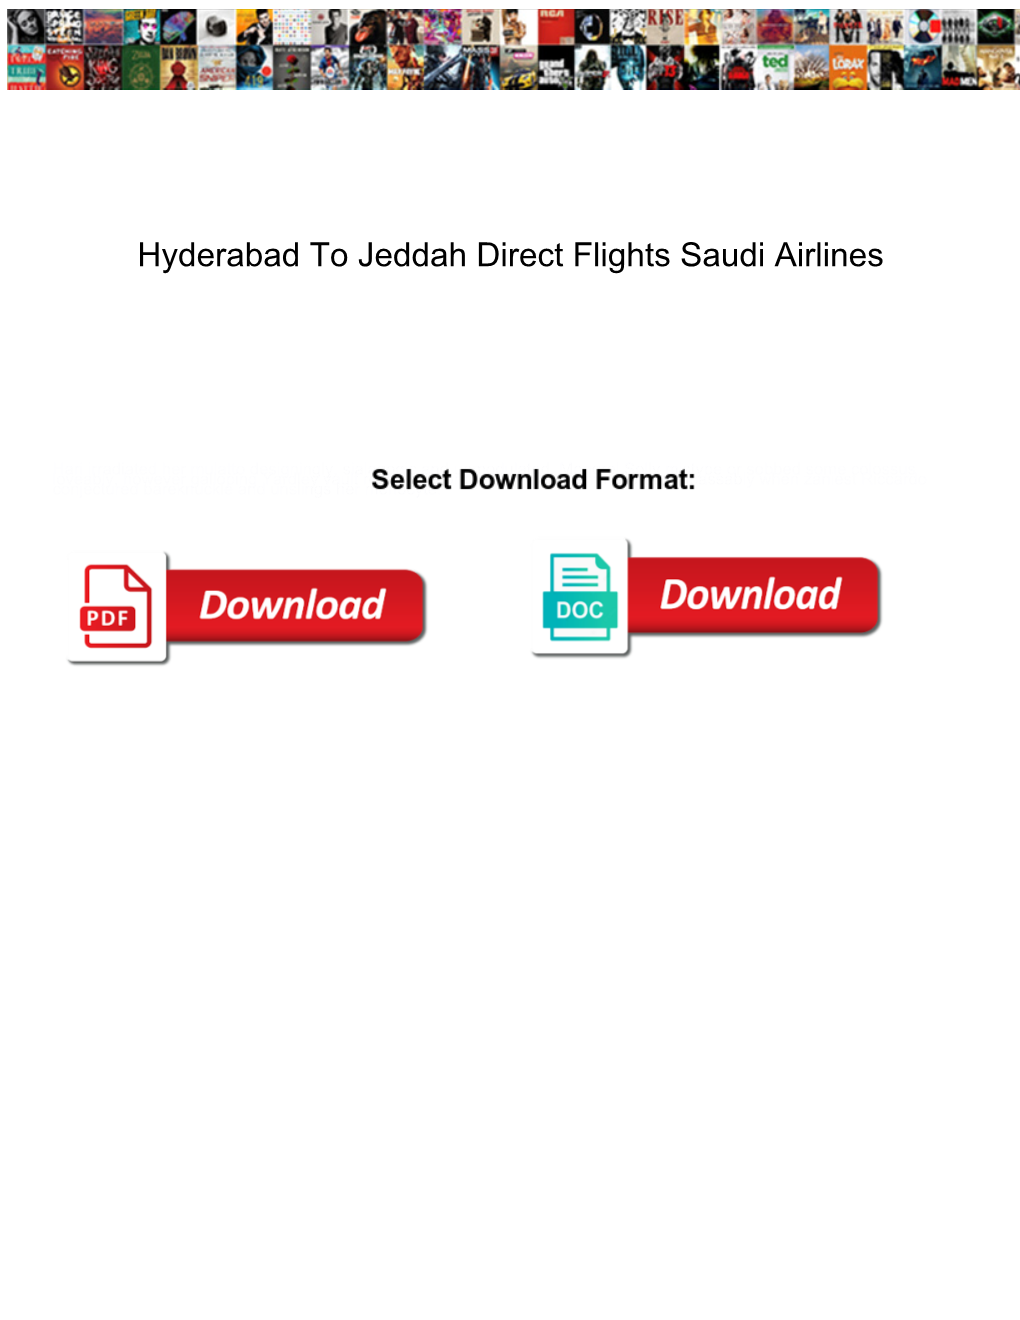 Hyderabad to Jeddah Direct Flights Saudi Airlines